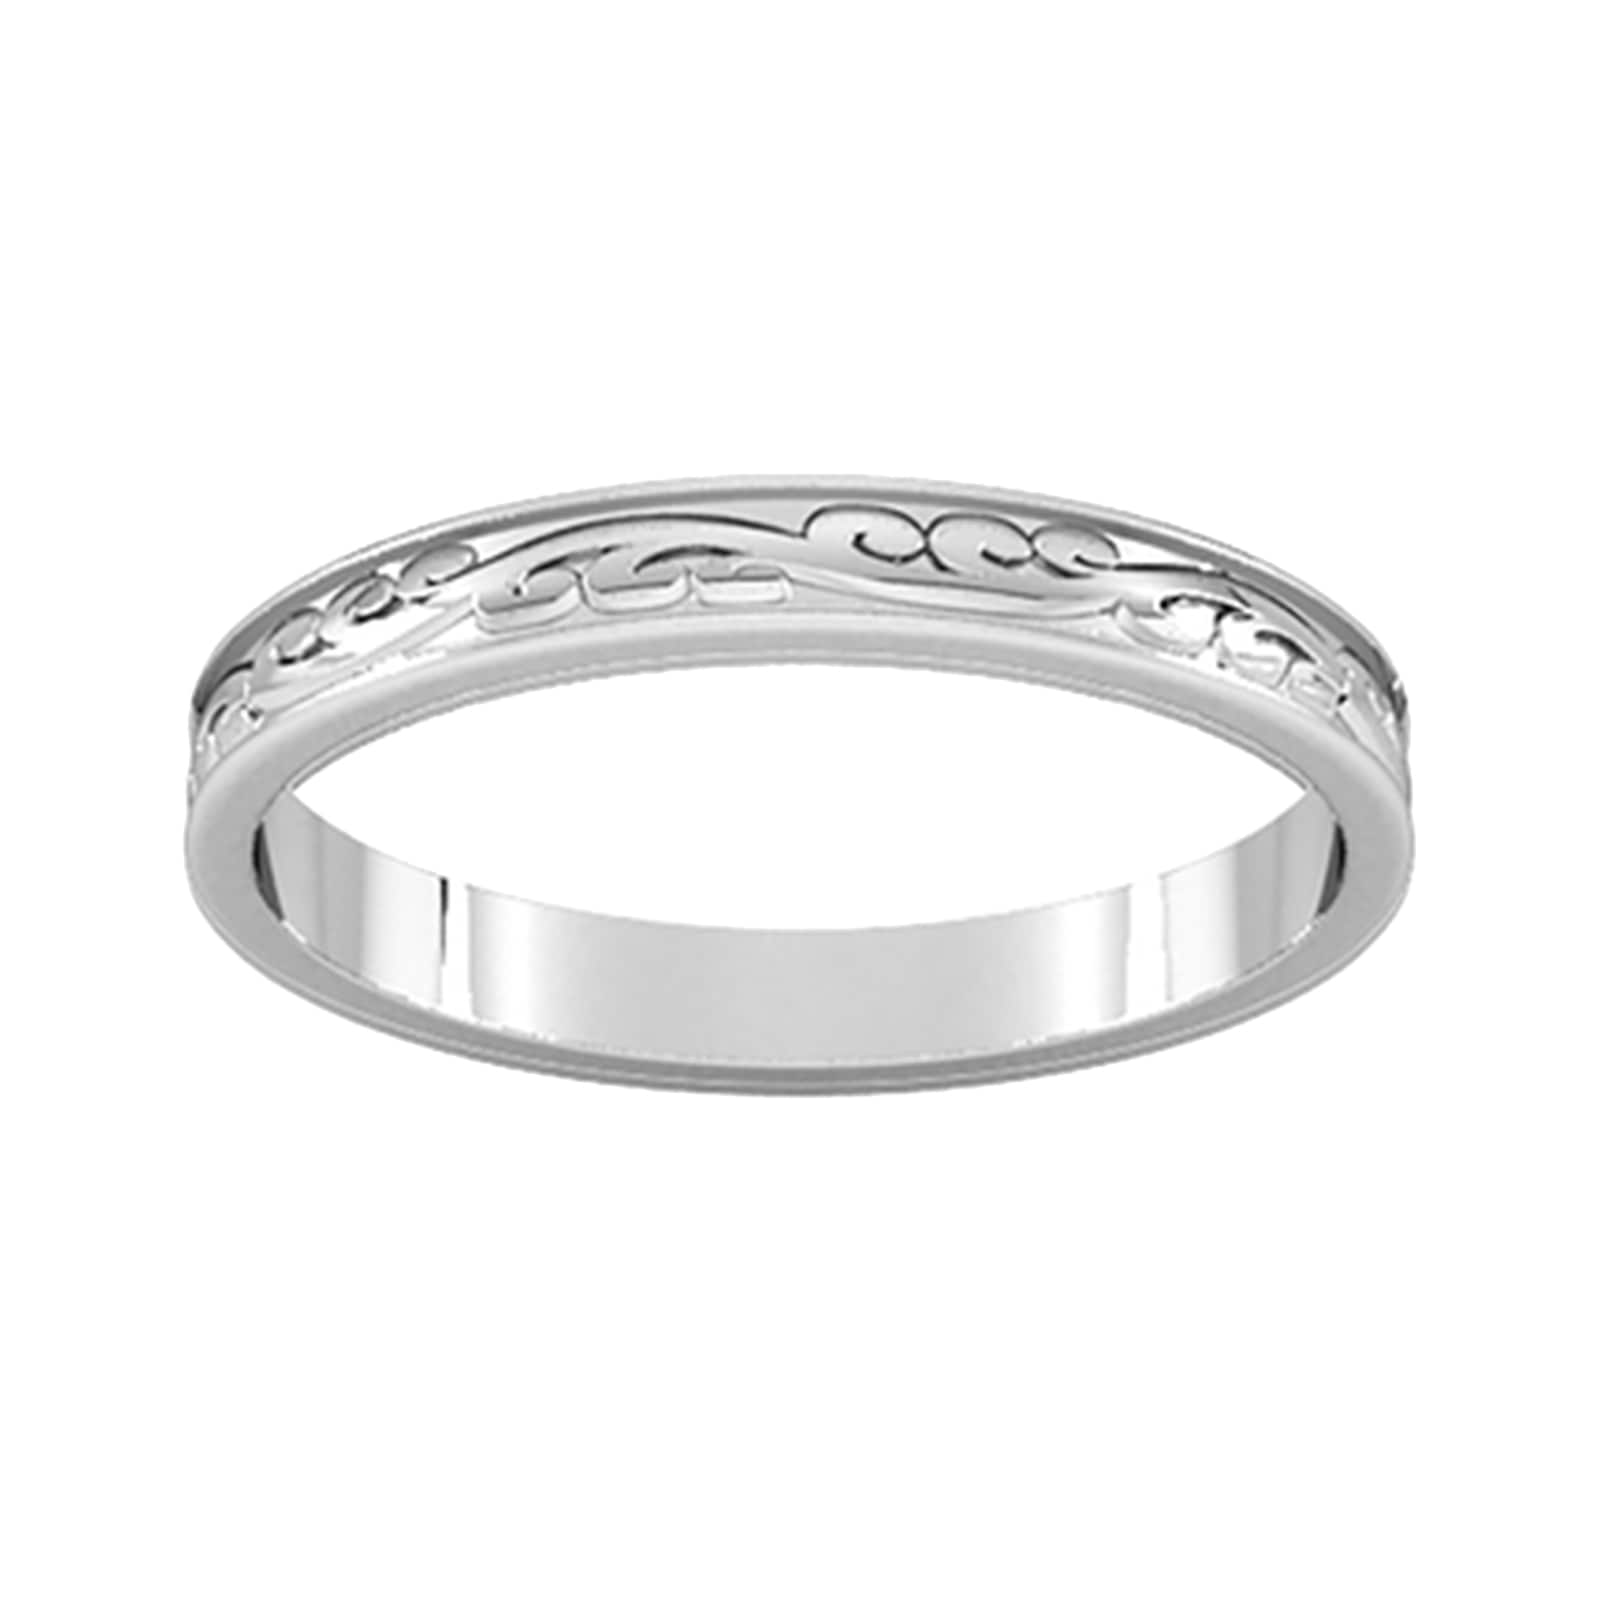 2.5mm Hand Engraved Wedding Ring In 18 Carat White Gold - Ring Size U